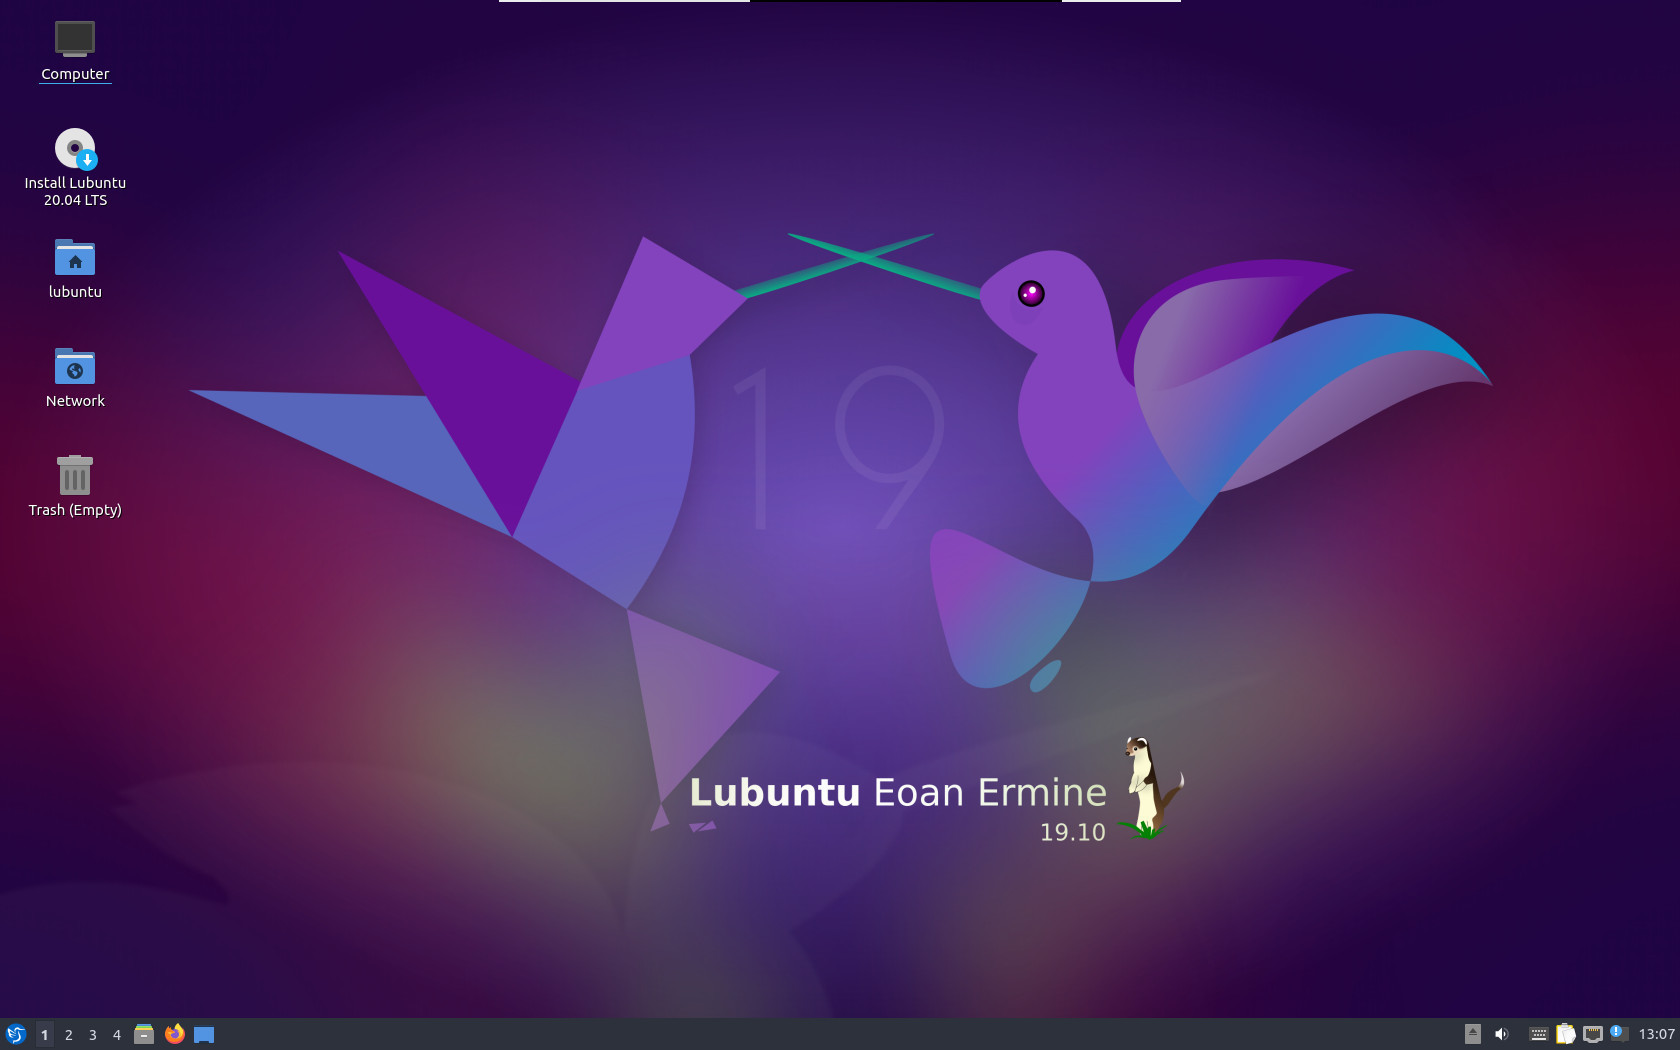 Lubuntu 04 Beta Desktop Amd64 Iso Vmware Workstation Player15 5 1 Sparky 5 9 X86 64 Xfce ゆったりとlinux